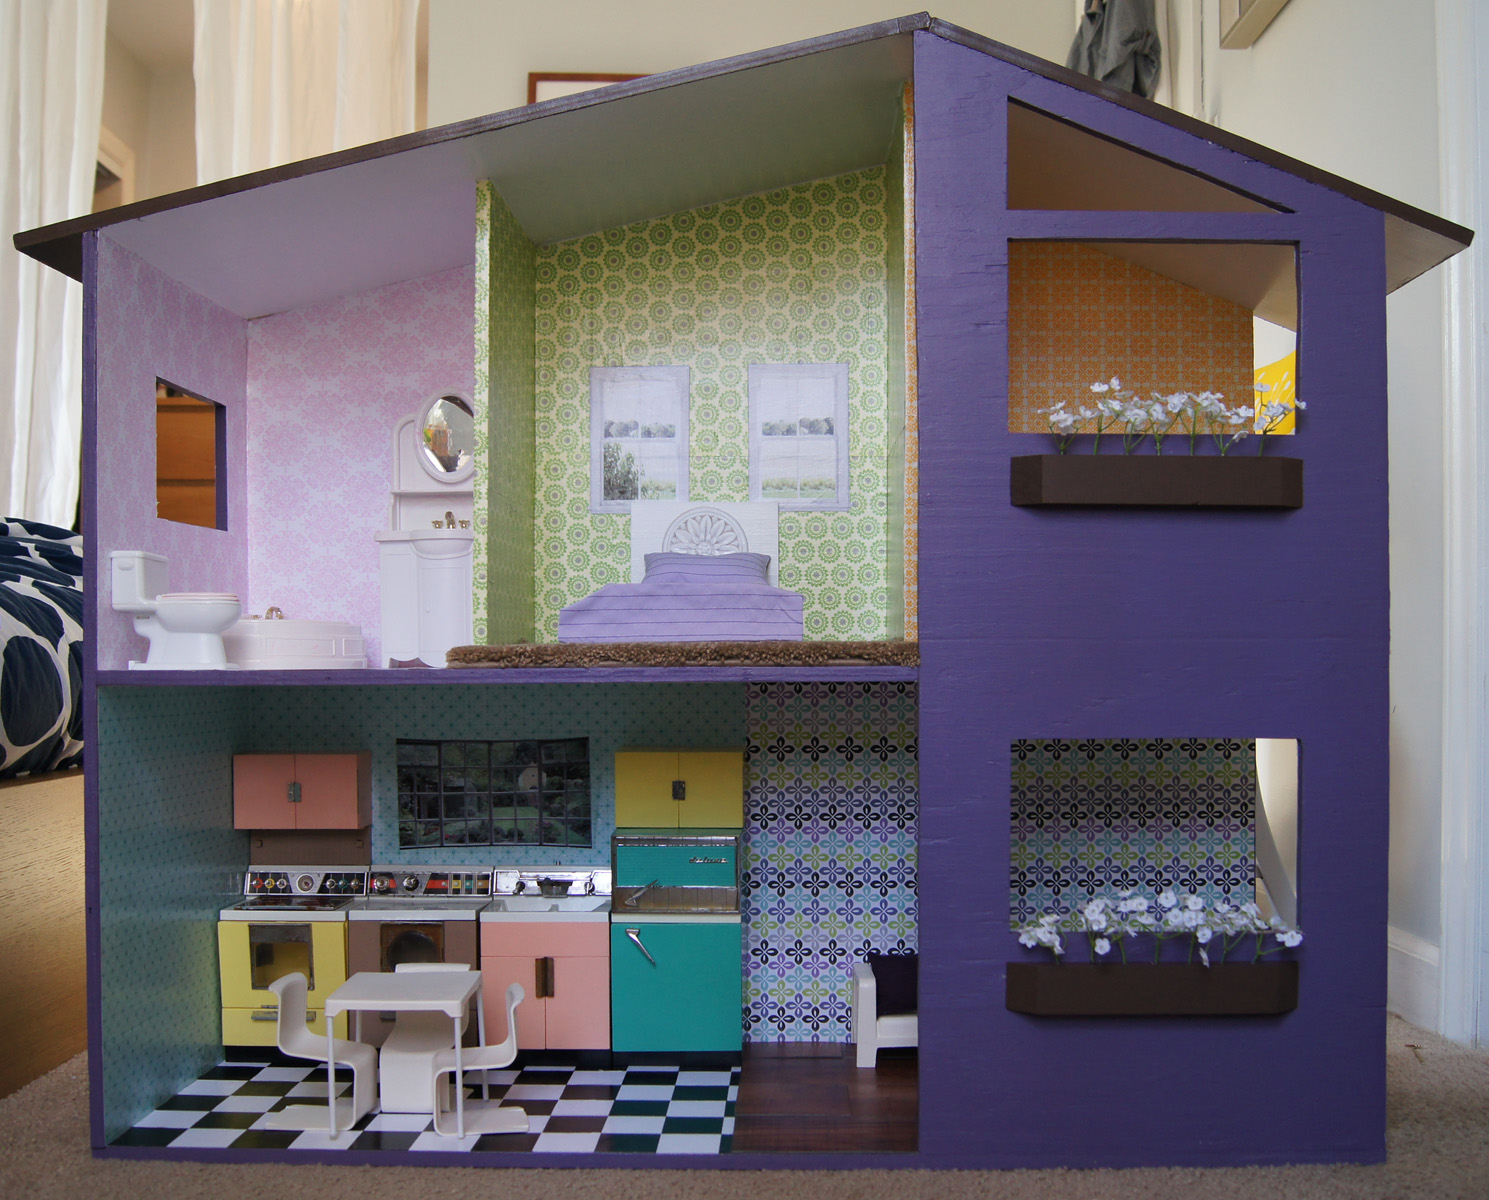 Build The Dollhouse Case For A Simple Dolls House Or Dollhouse | Apps 